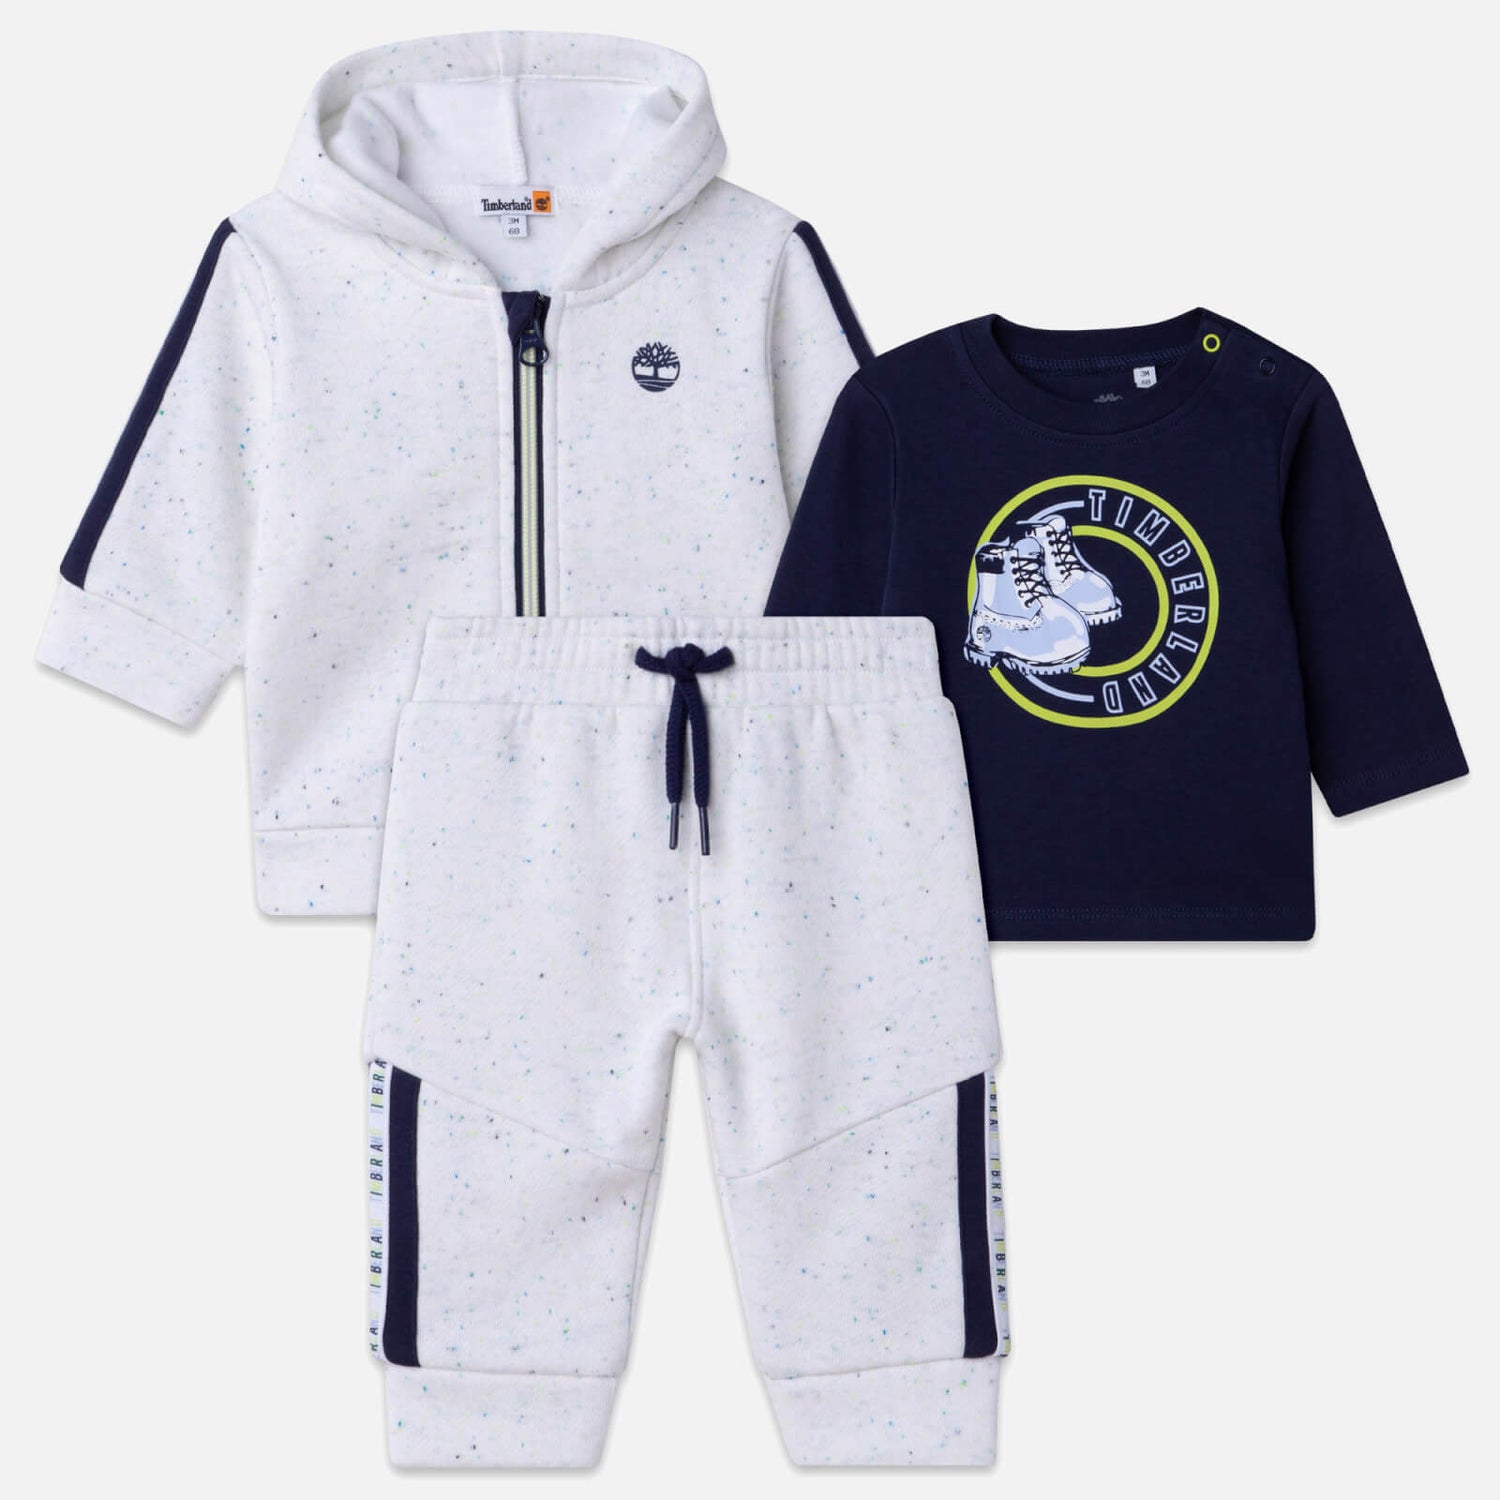 Timberland Babies’ Cotton-Blend Jersey Hoodie, T-Shirt and Jogging Bottoms Set -  9-12 Months